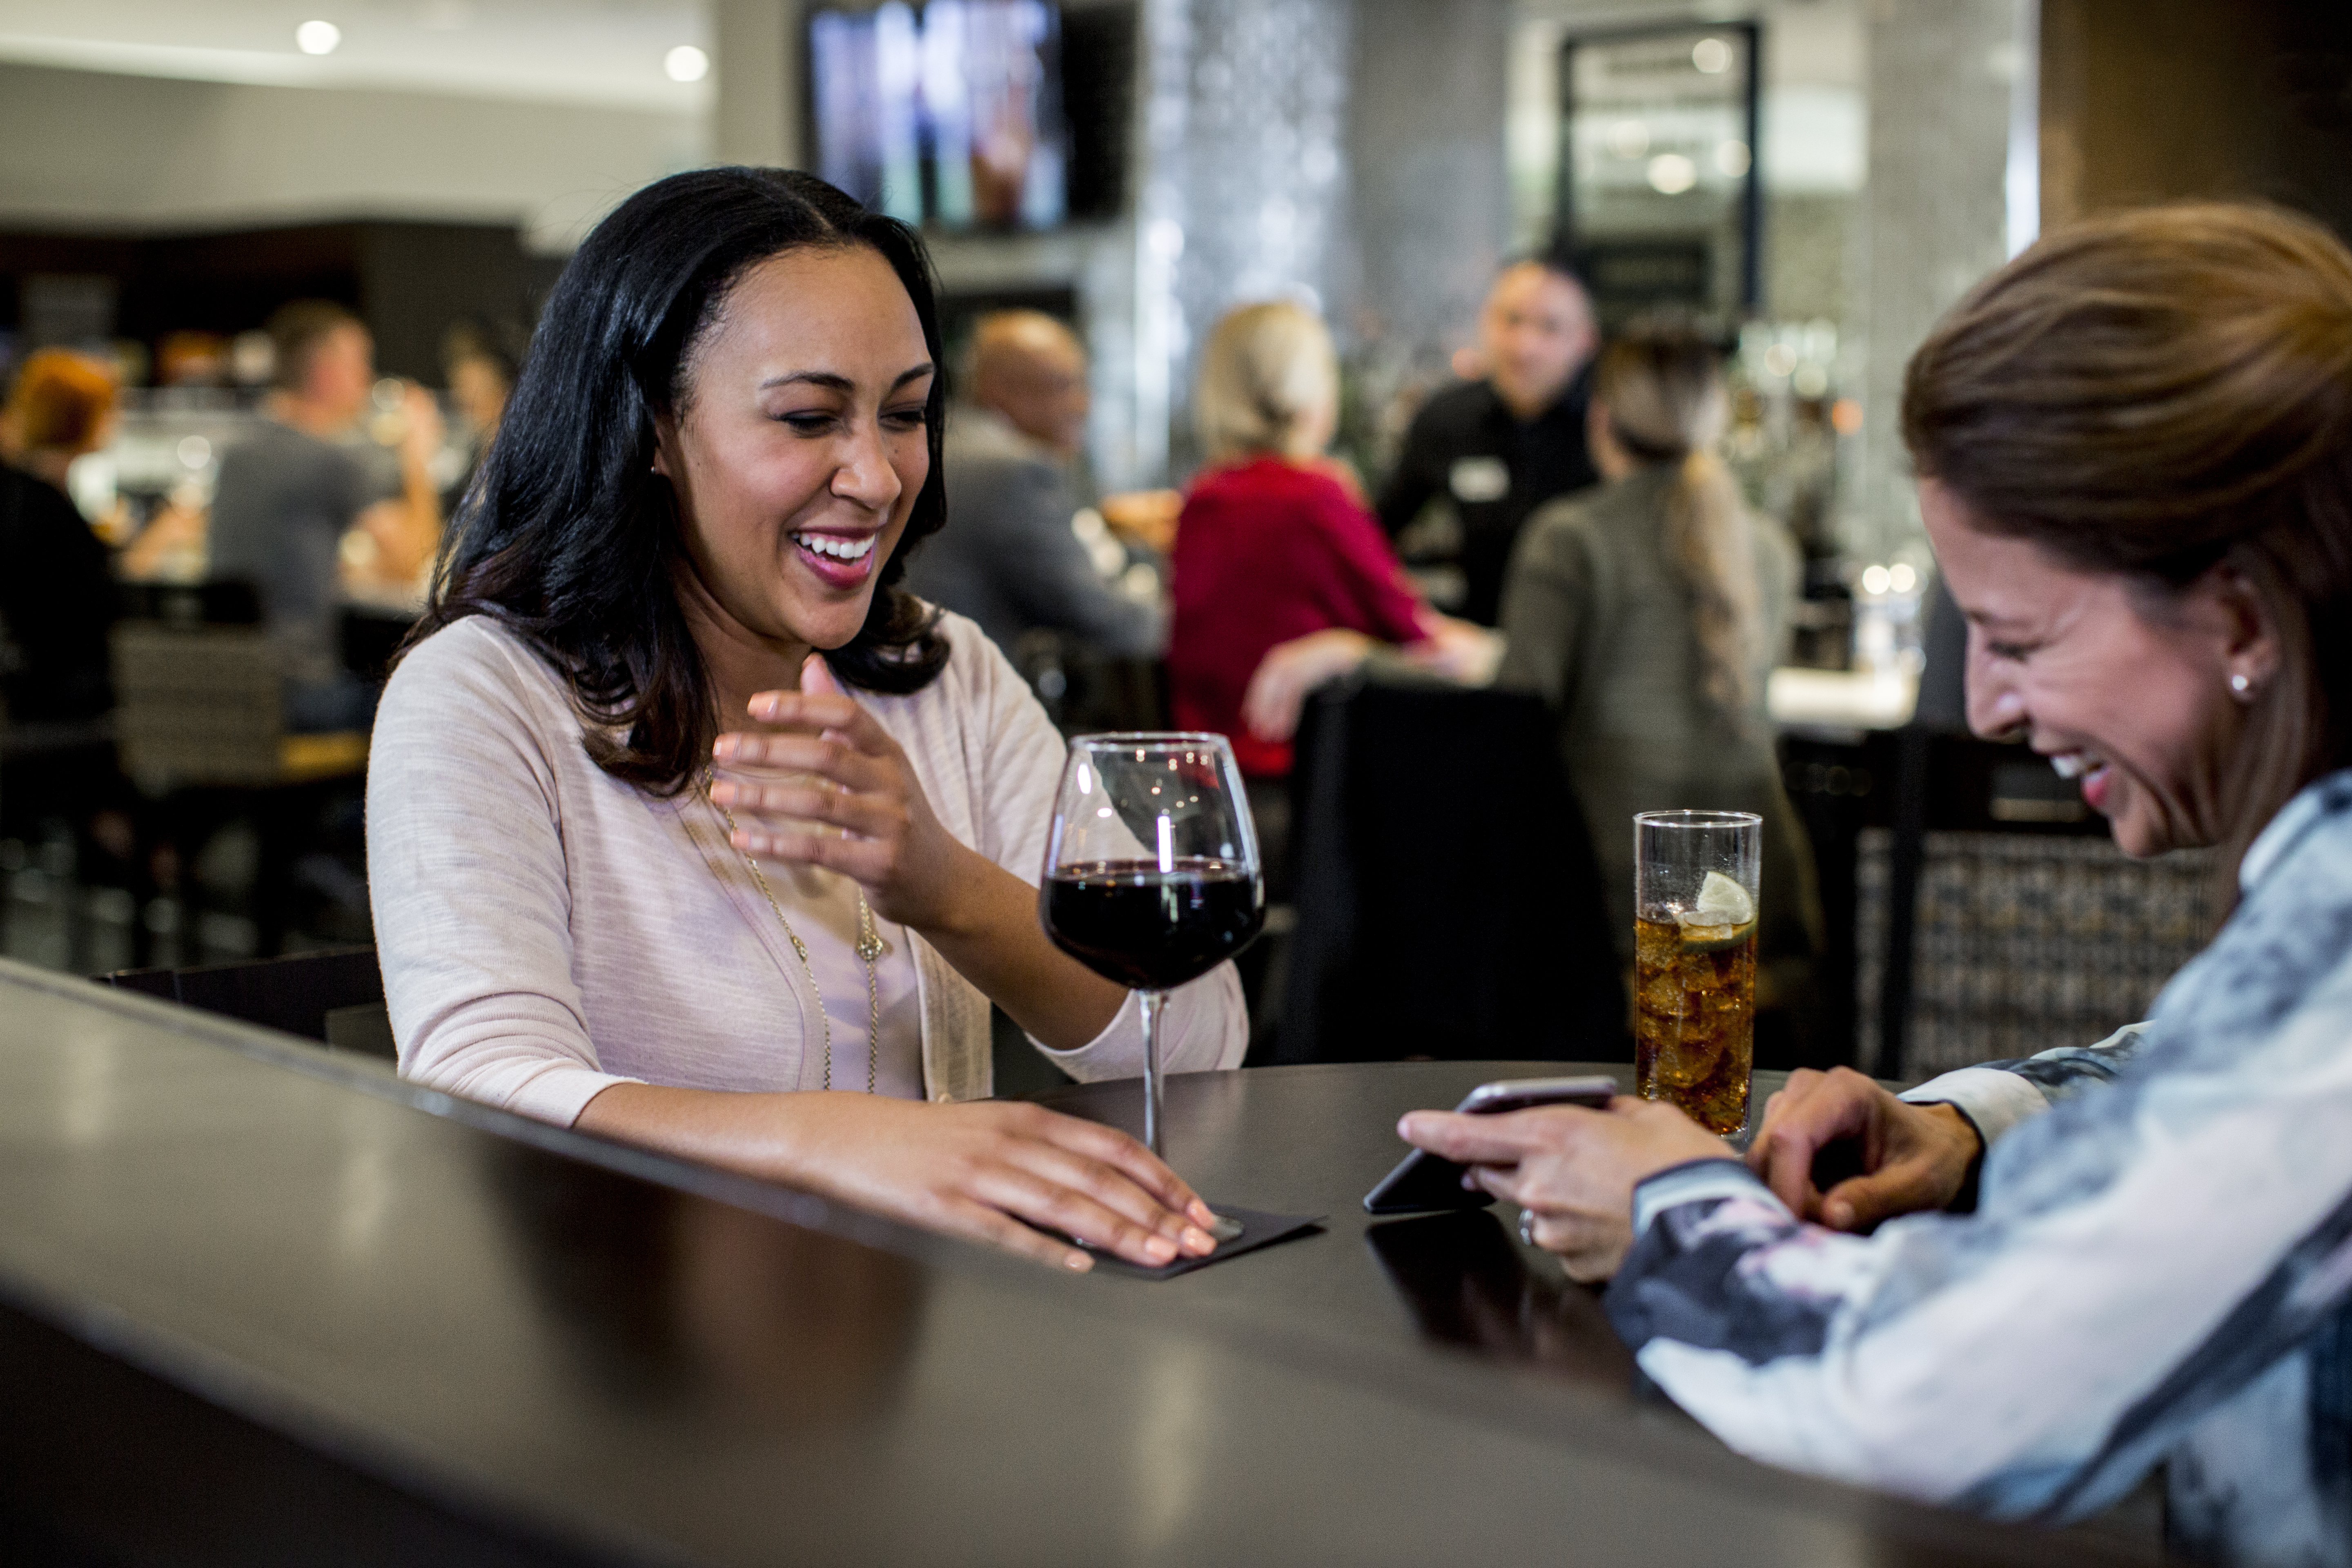 Enjoy a glass of wine at Landmarks Bar